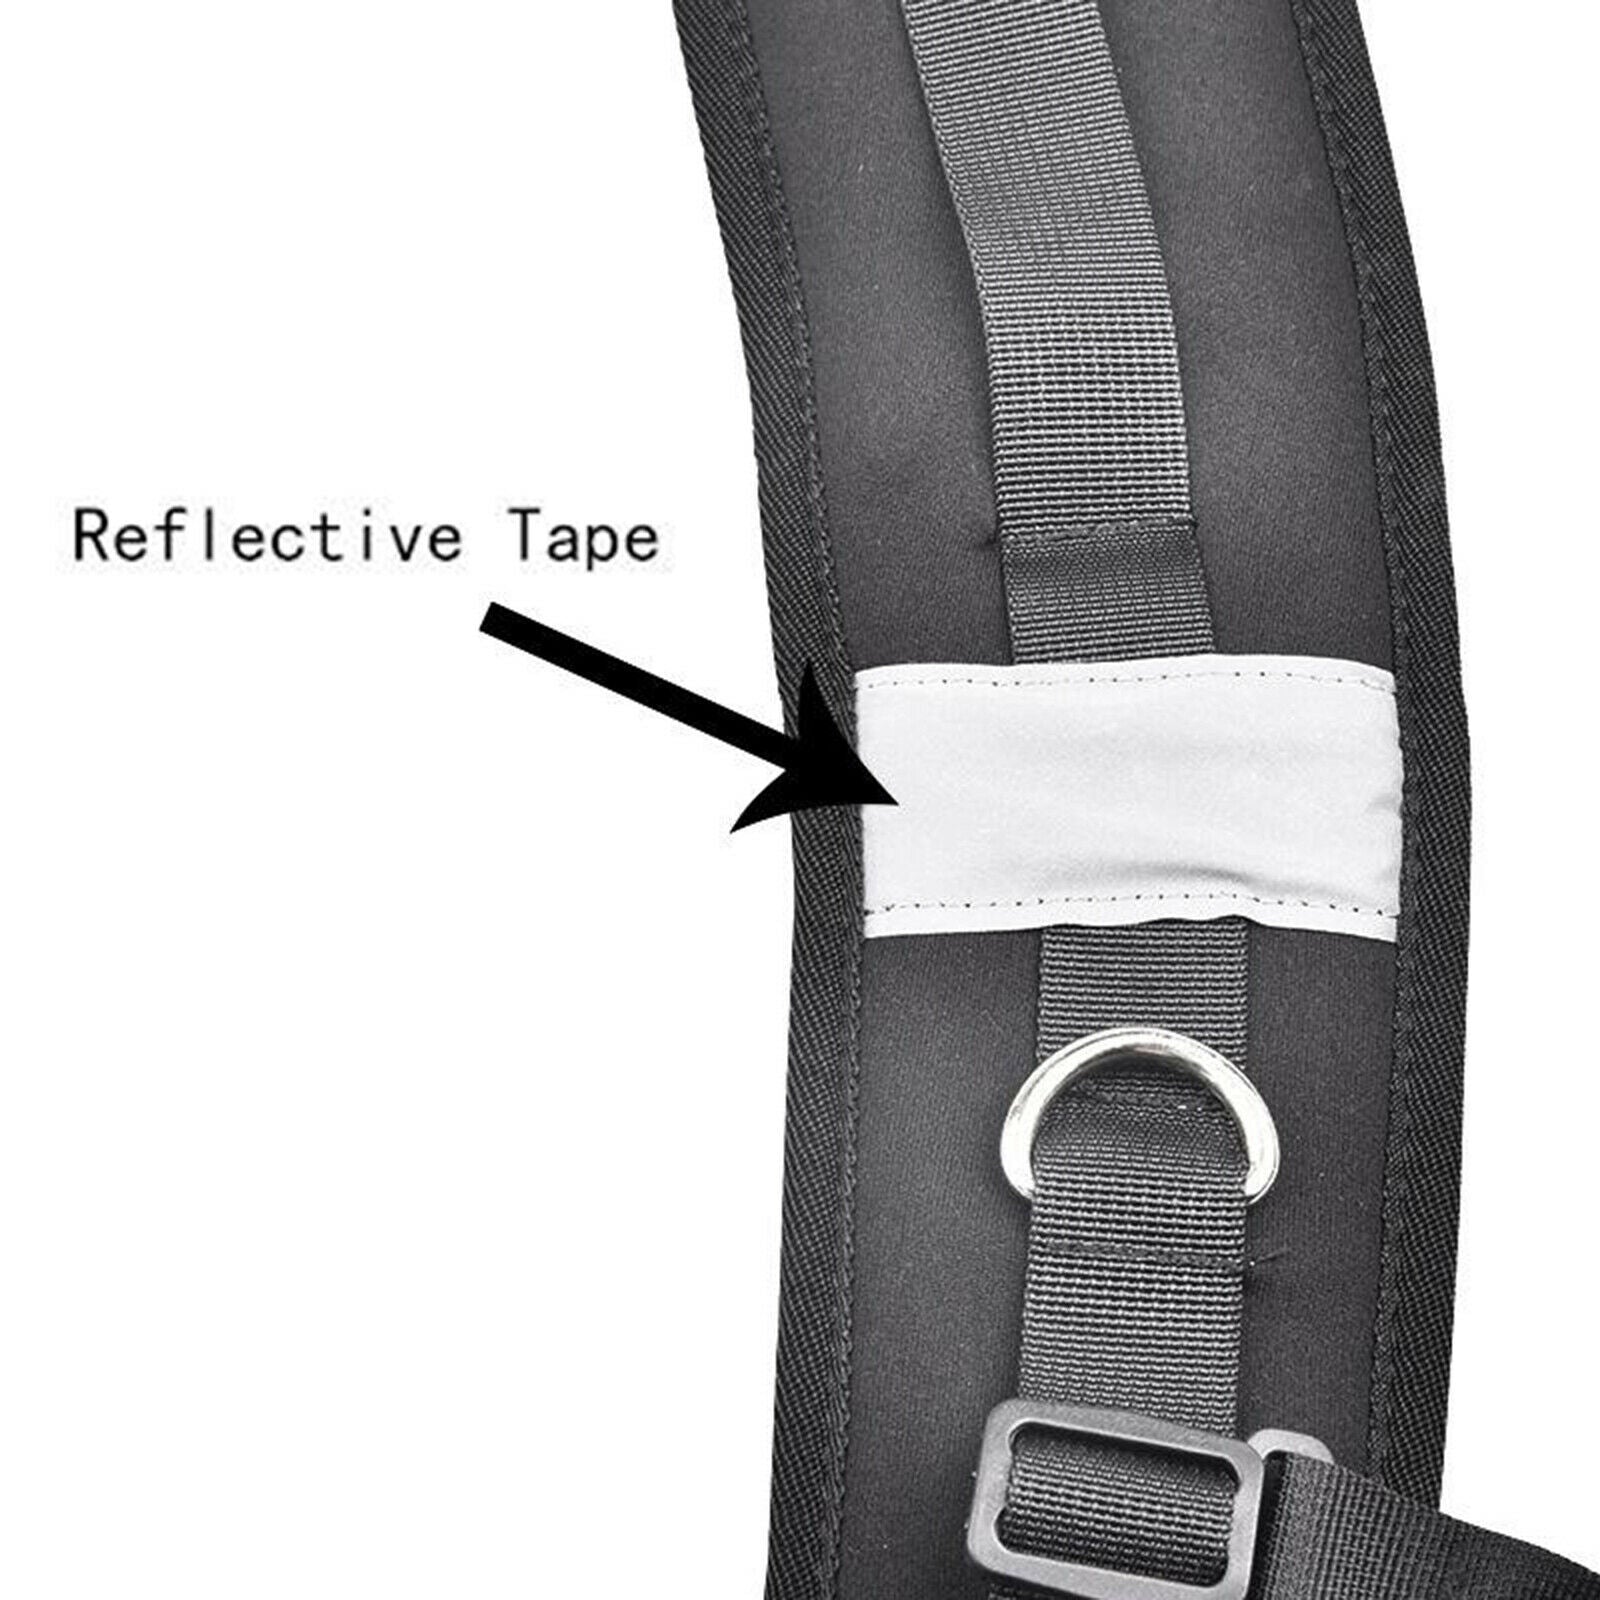 Replacement Backpack Shoulder Straps Adjustable With Hooks Reflective Strip